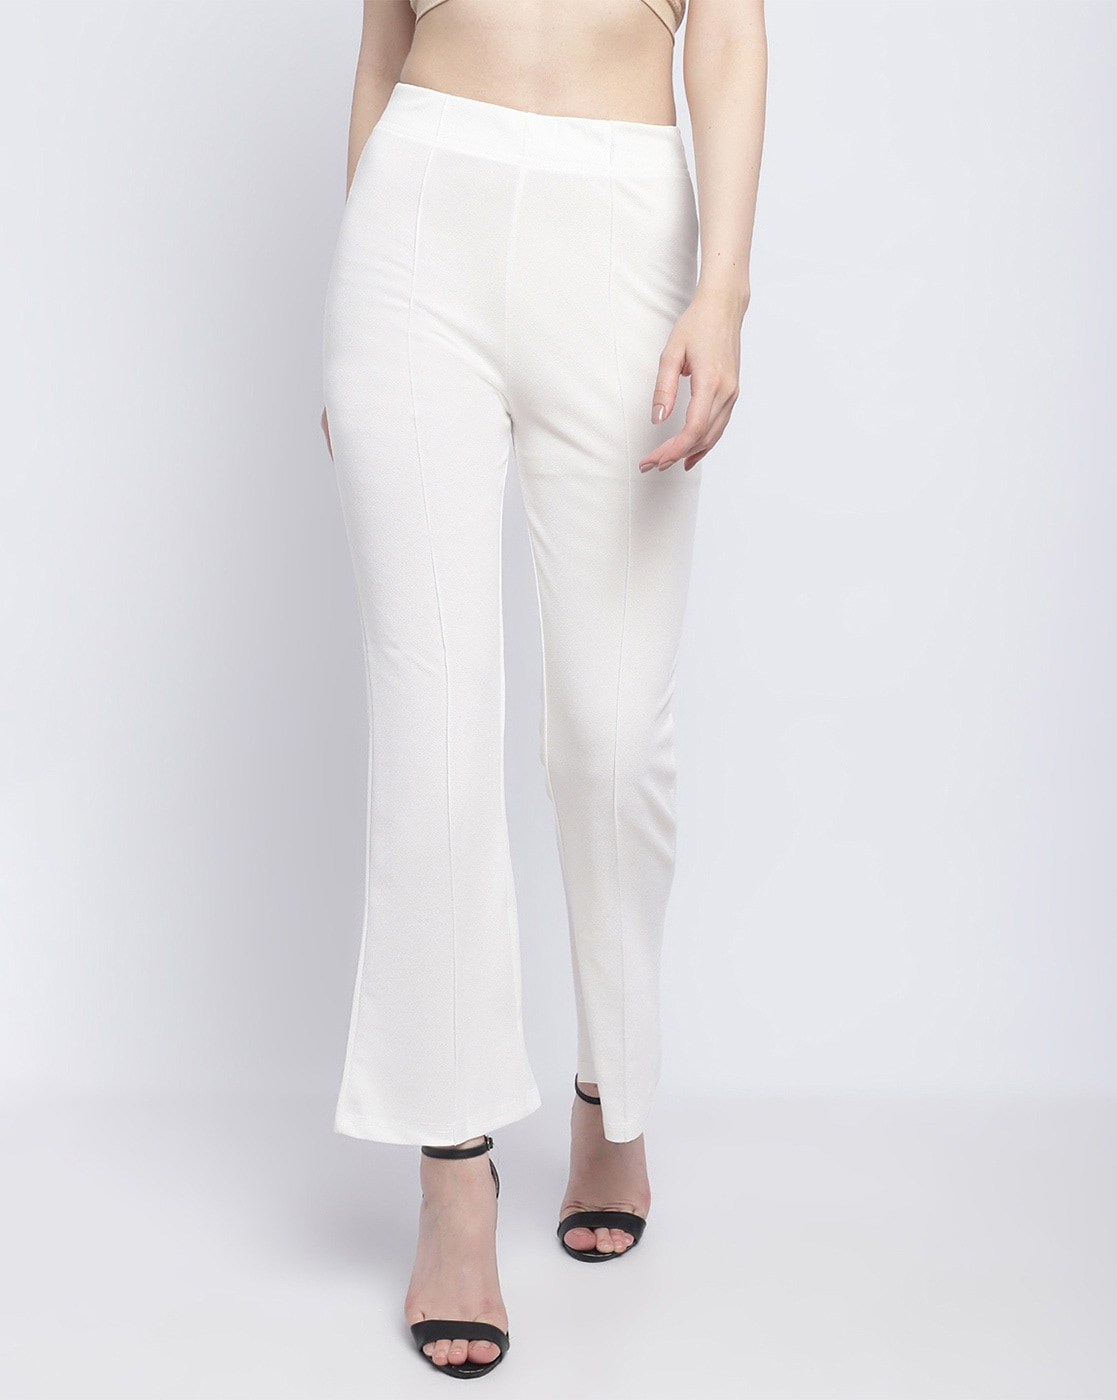 Buy Women White Floral Print Pants Online at Sassafras